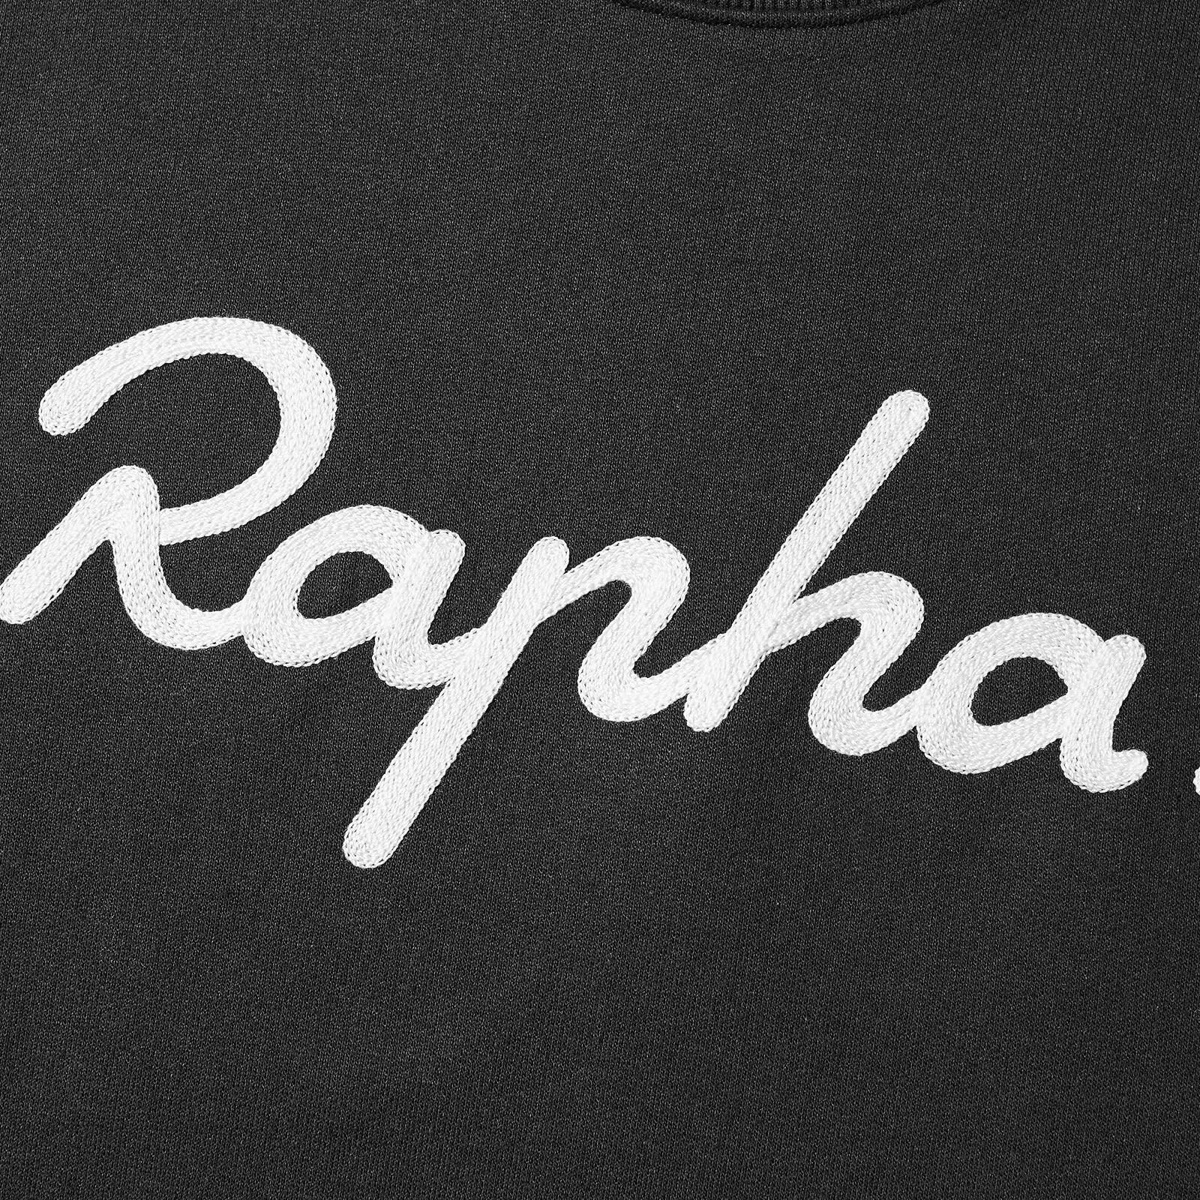 Rapha Men's Logo Pullover Hoody in Charcoal Marl Rapha